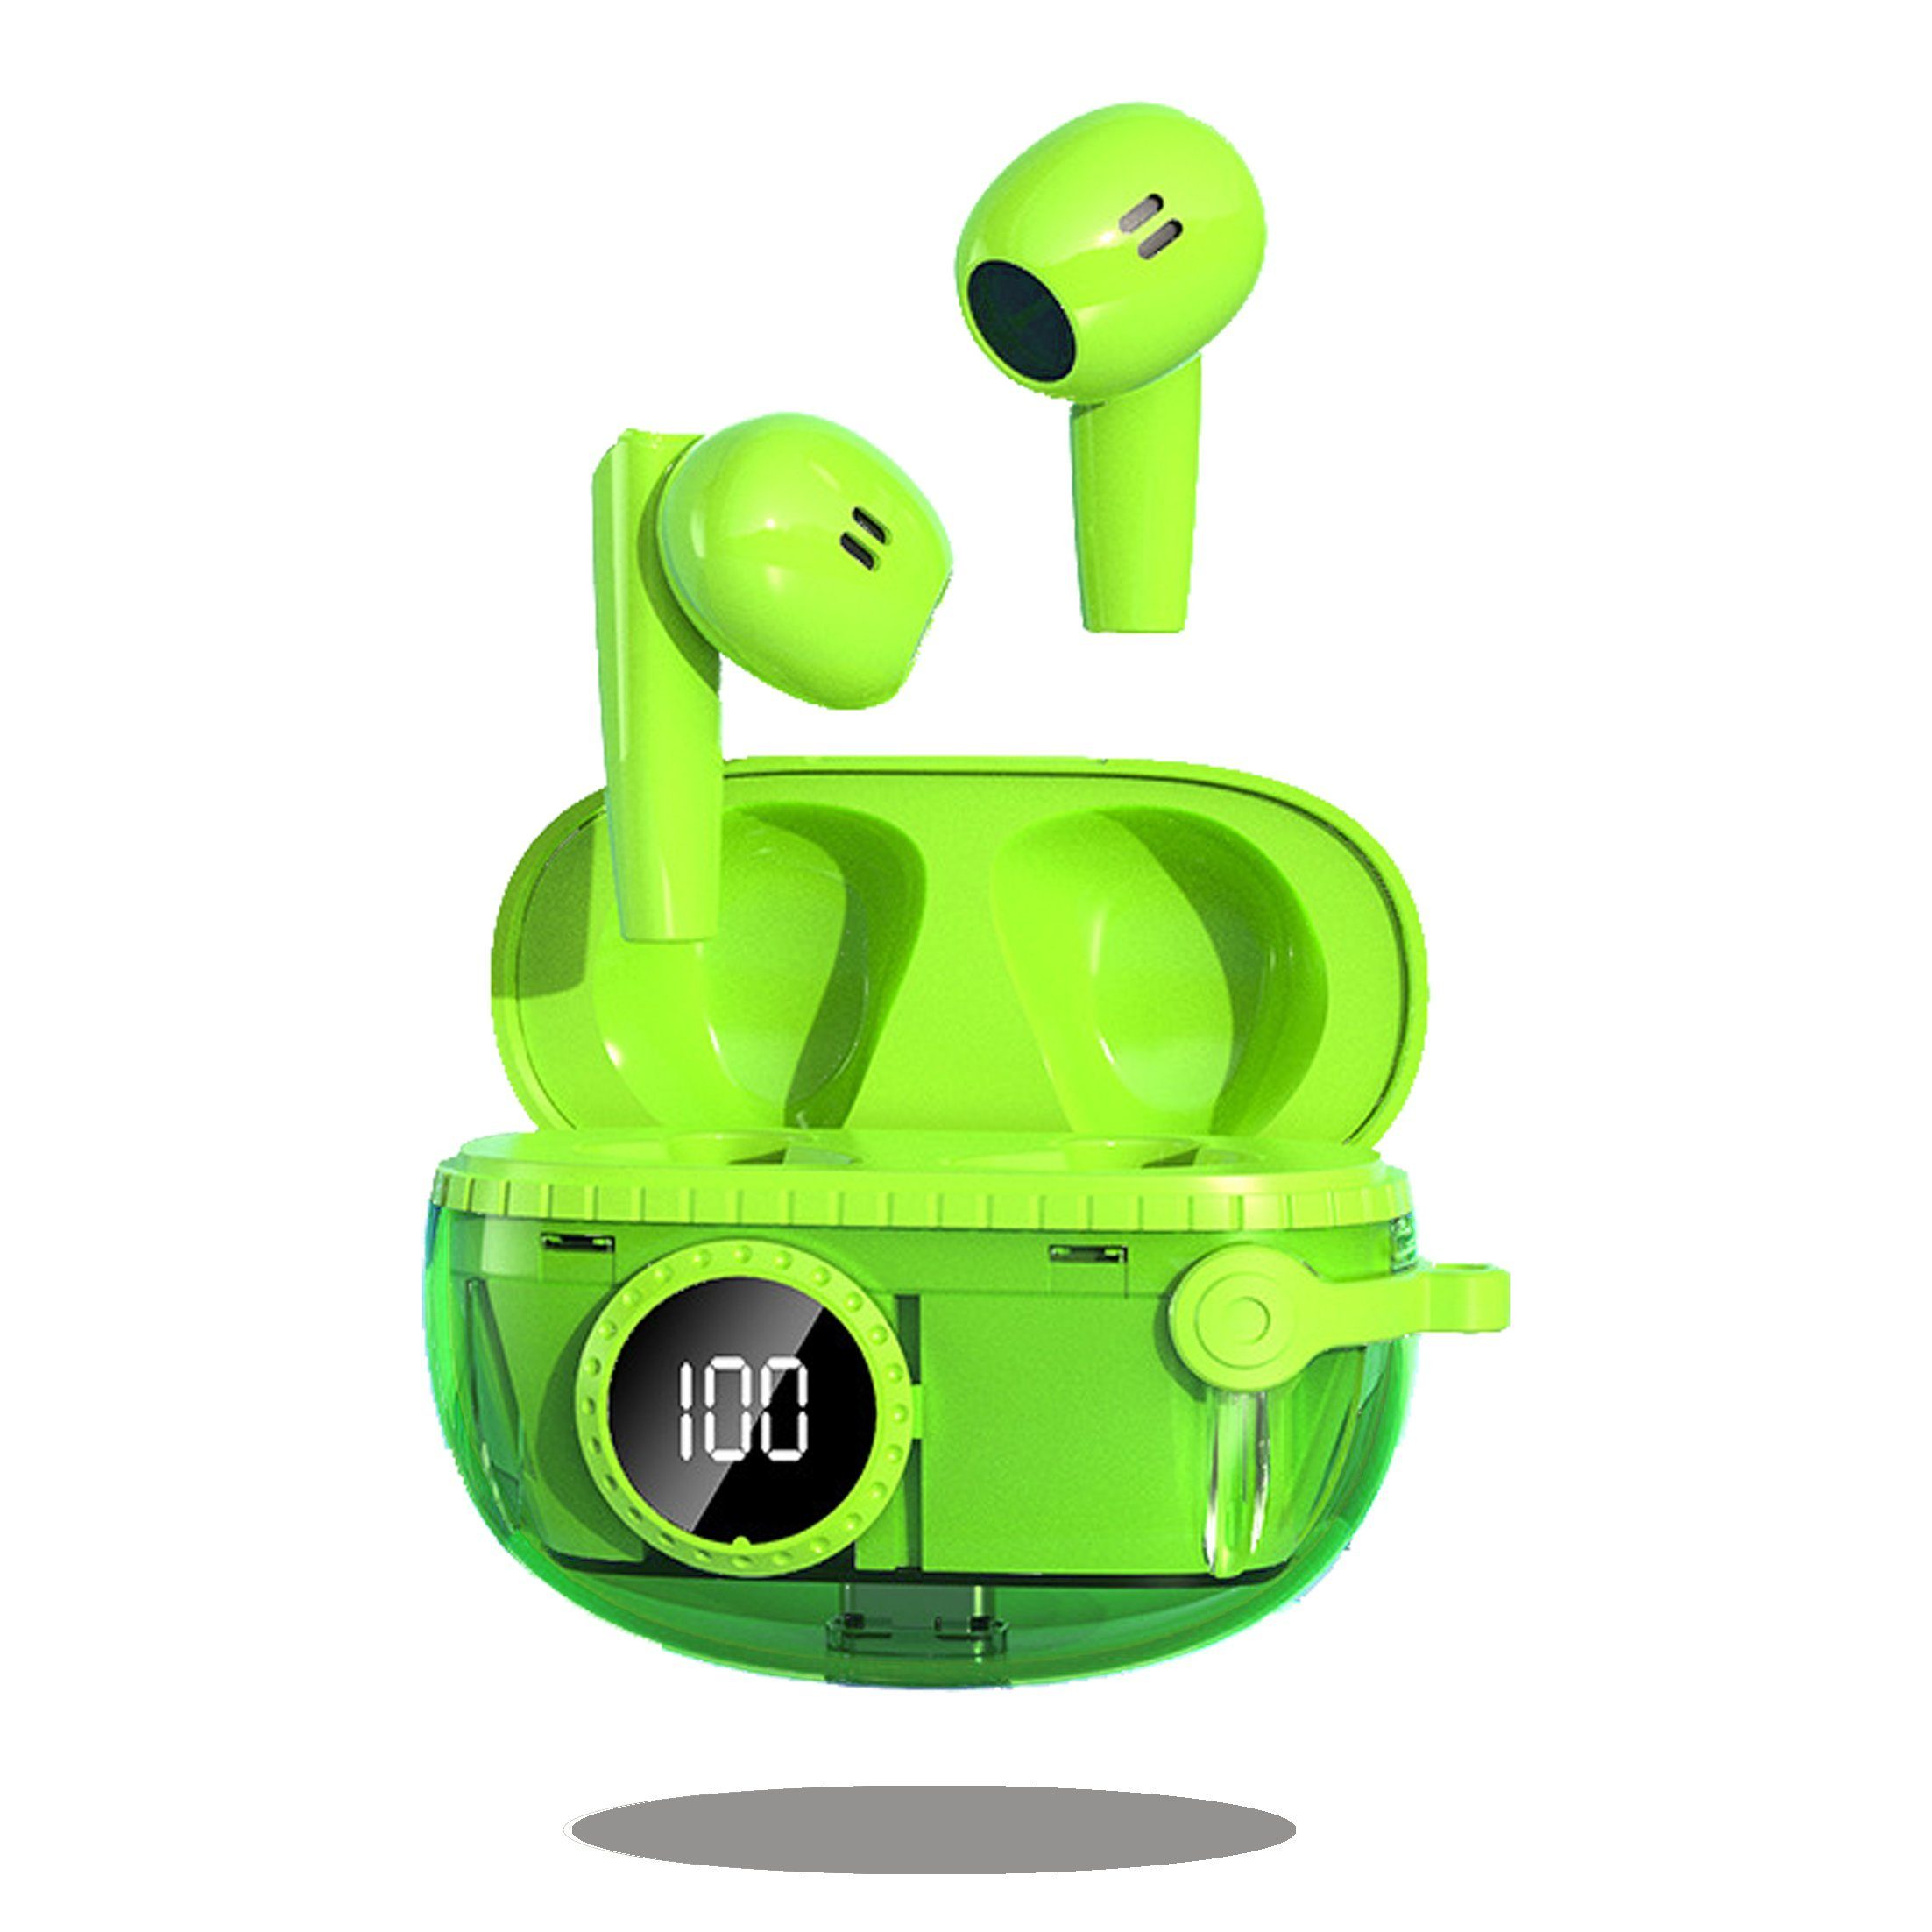 Diida Funk-Kopfhörer Kopfhörer,In-Ear-Bluetooth-Kopfhörer grün mit Geräuschunterdrückung,Smart